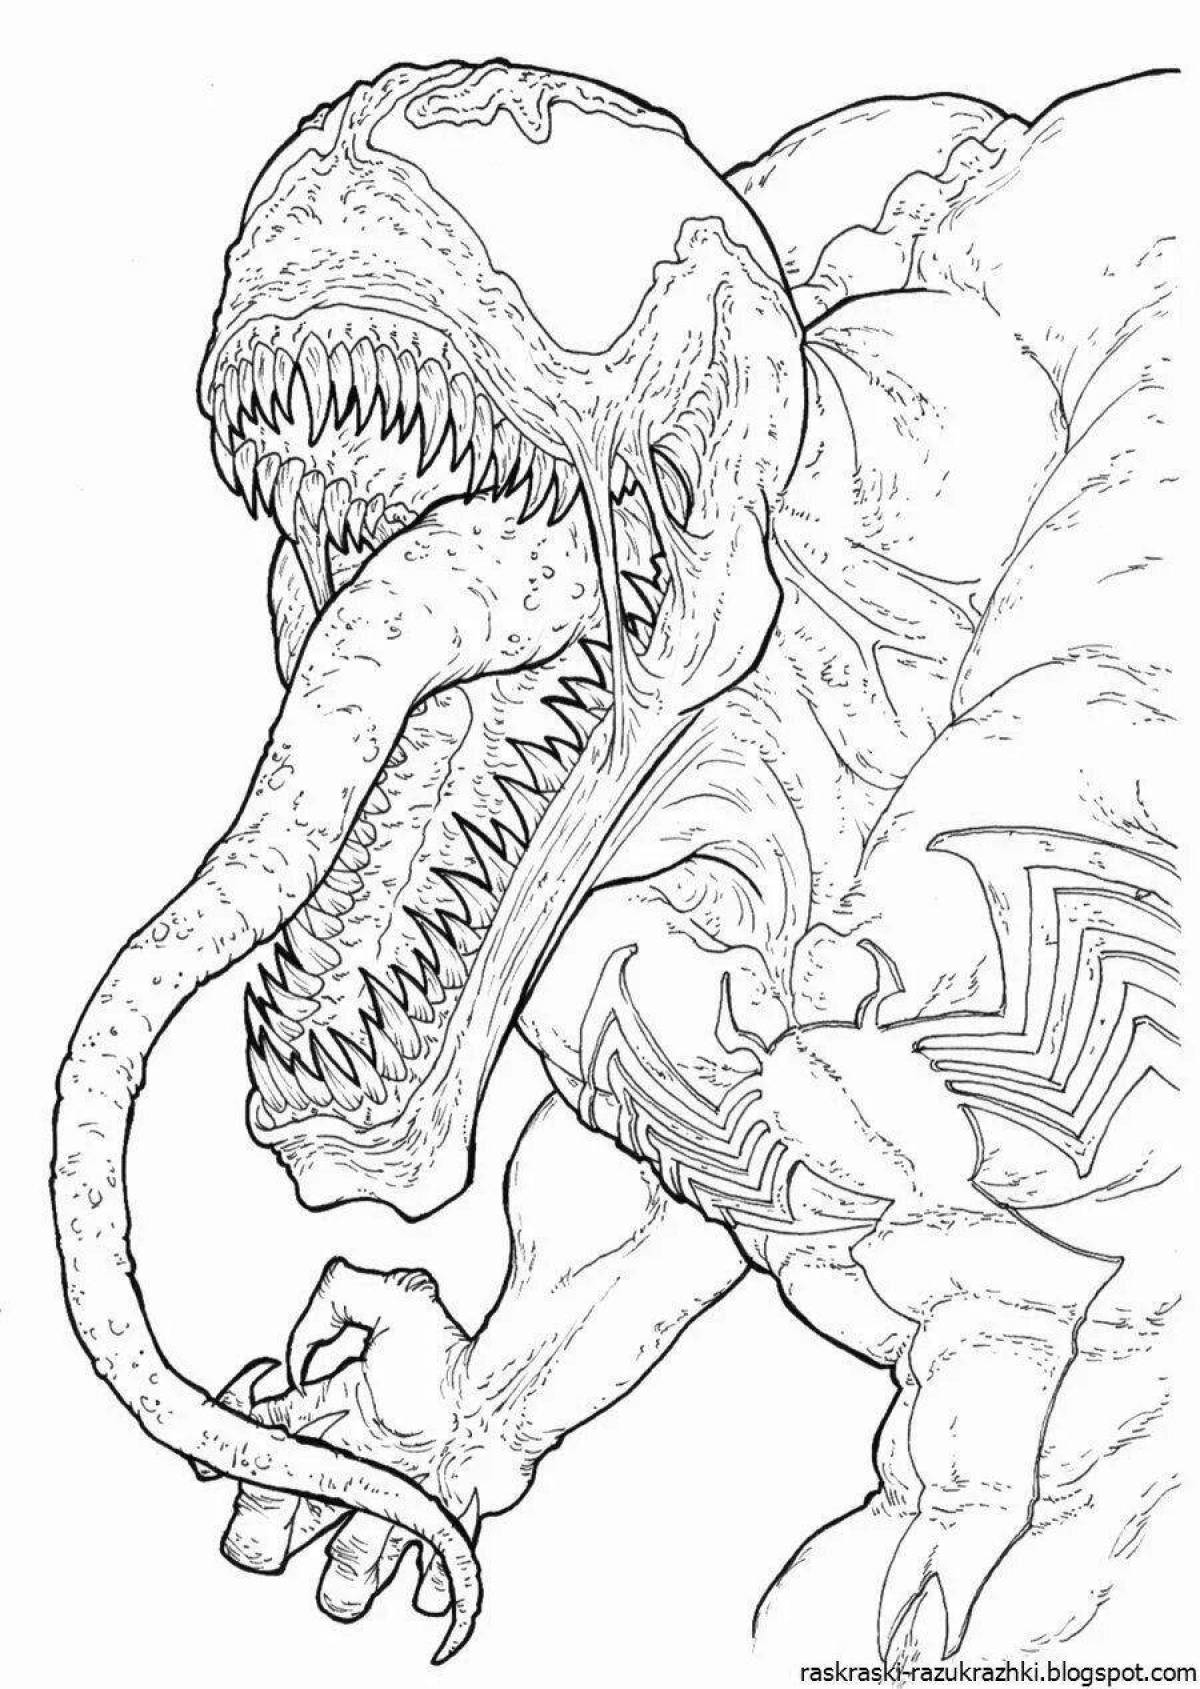 Venom carnage amazing coloring book